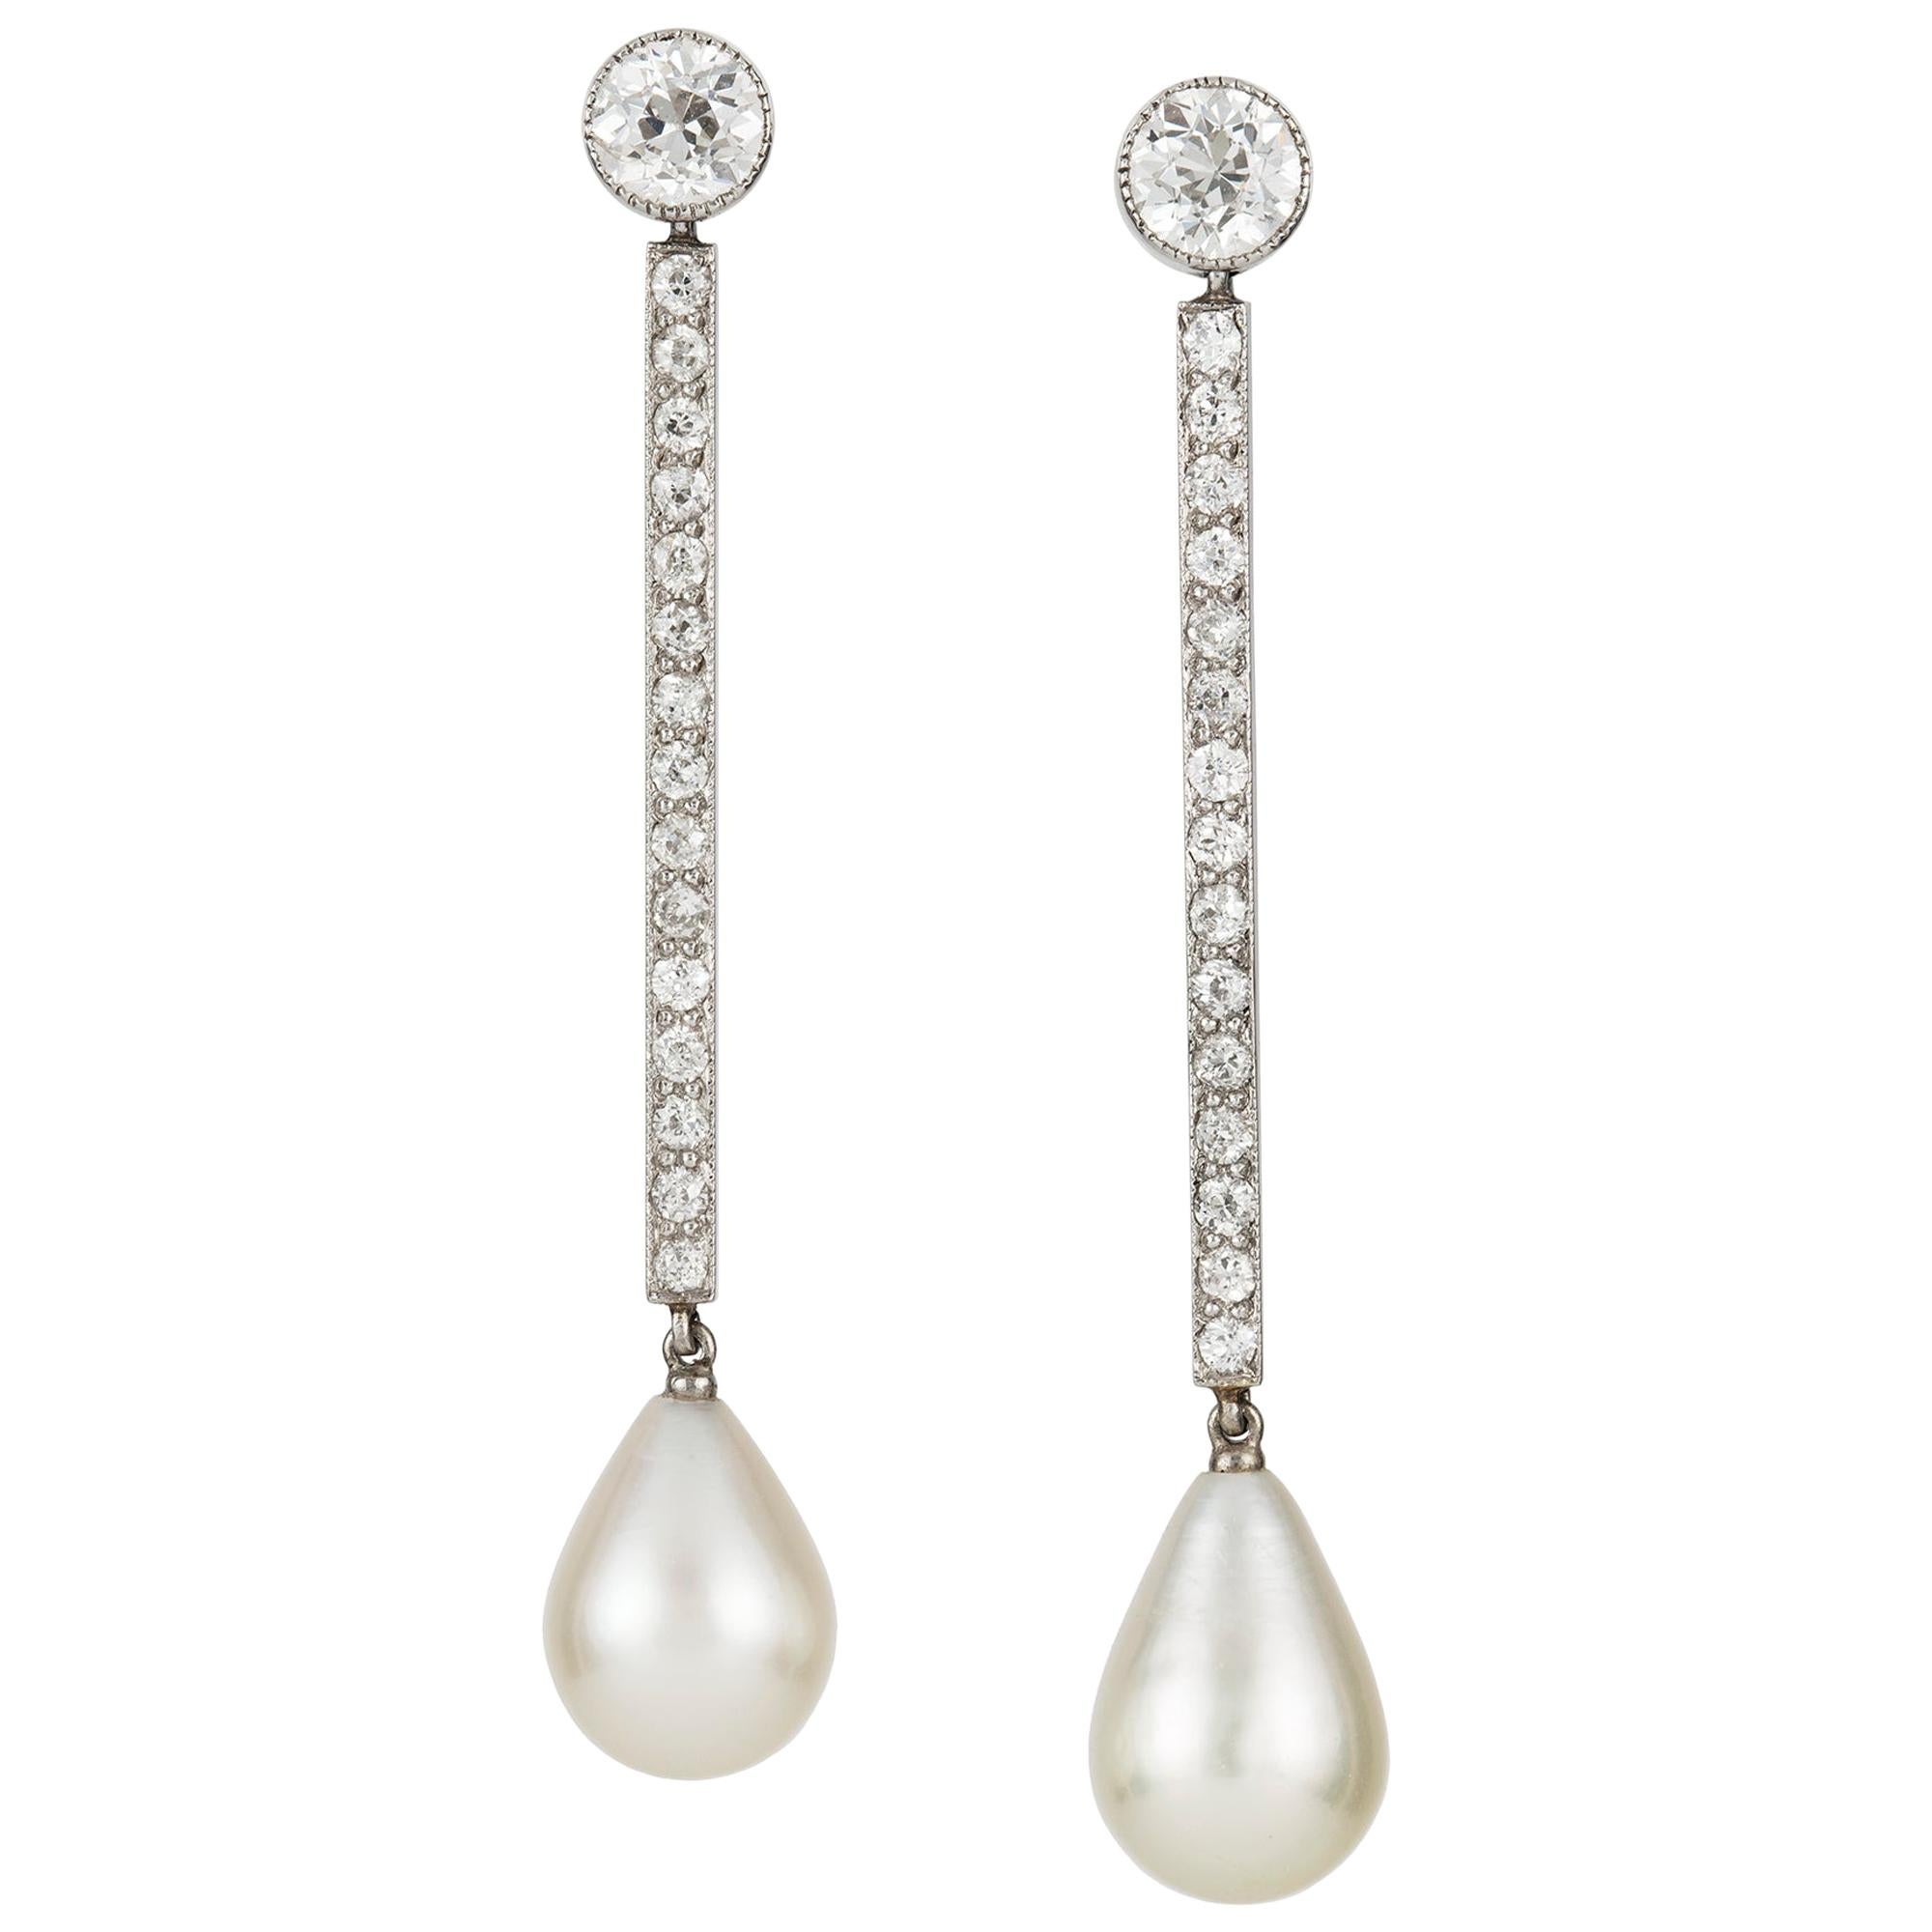 Pair of Art Deco Natural Pearl and Diamond Drop Earrings